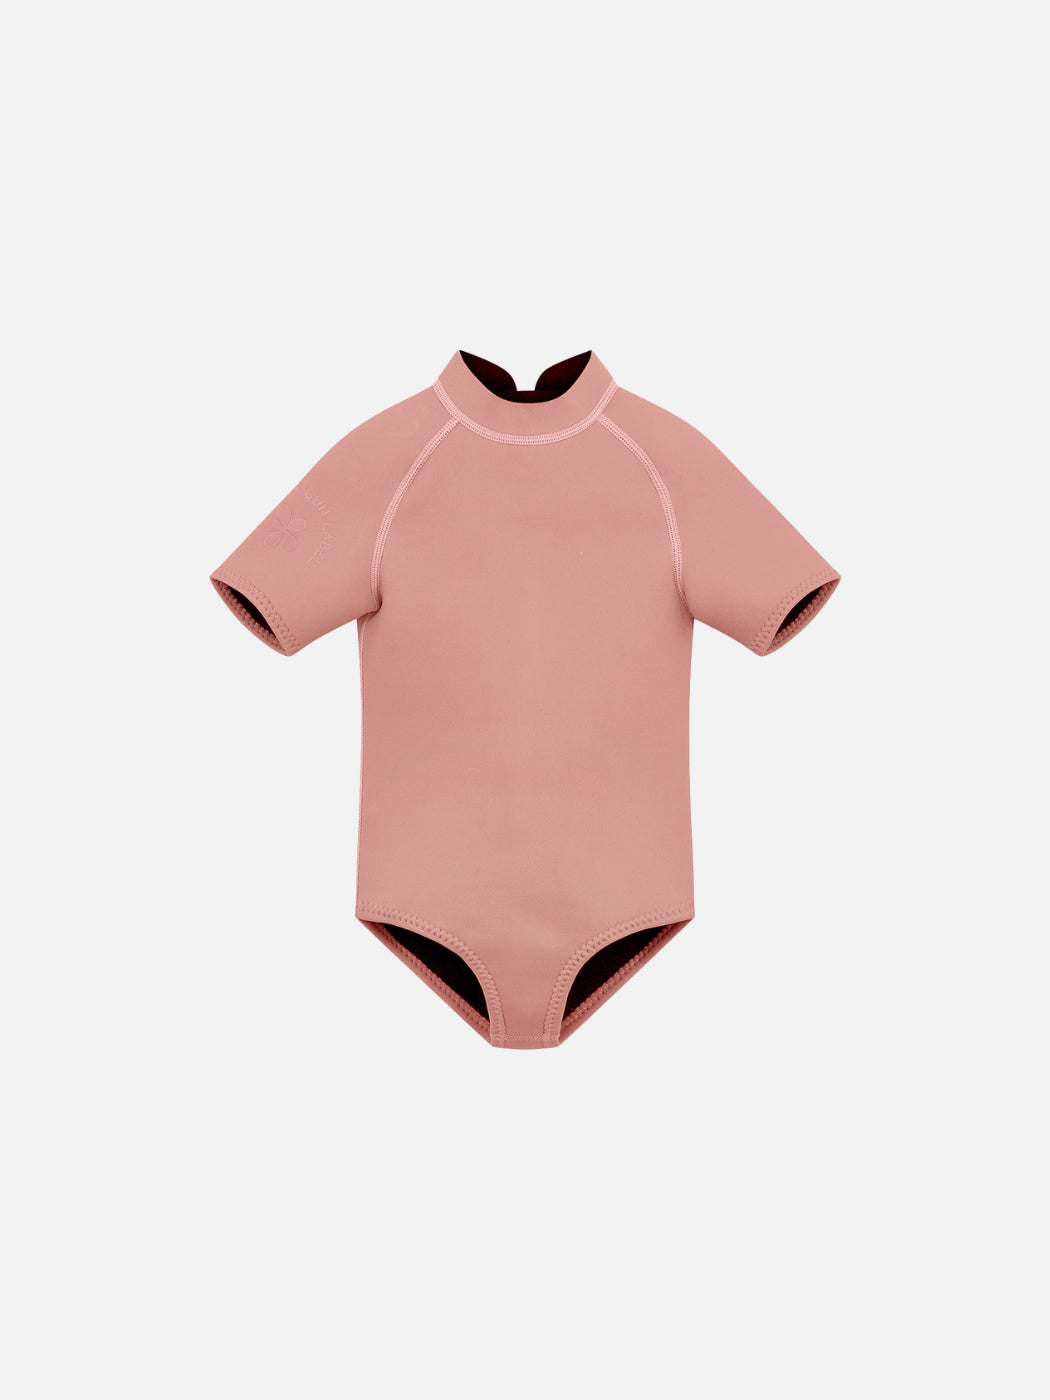 Short Sleeve Paddle Suit Wetsuit - Dusty Pink